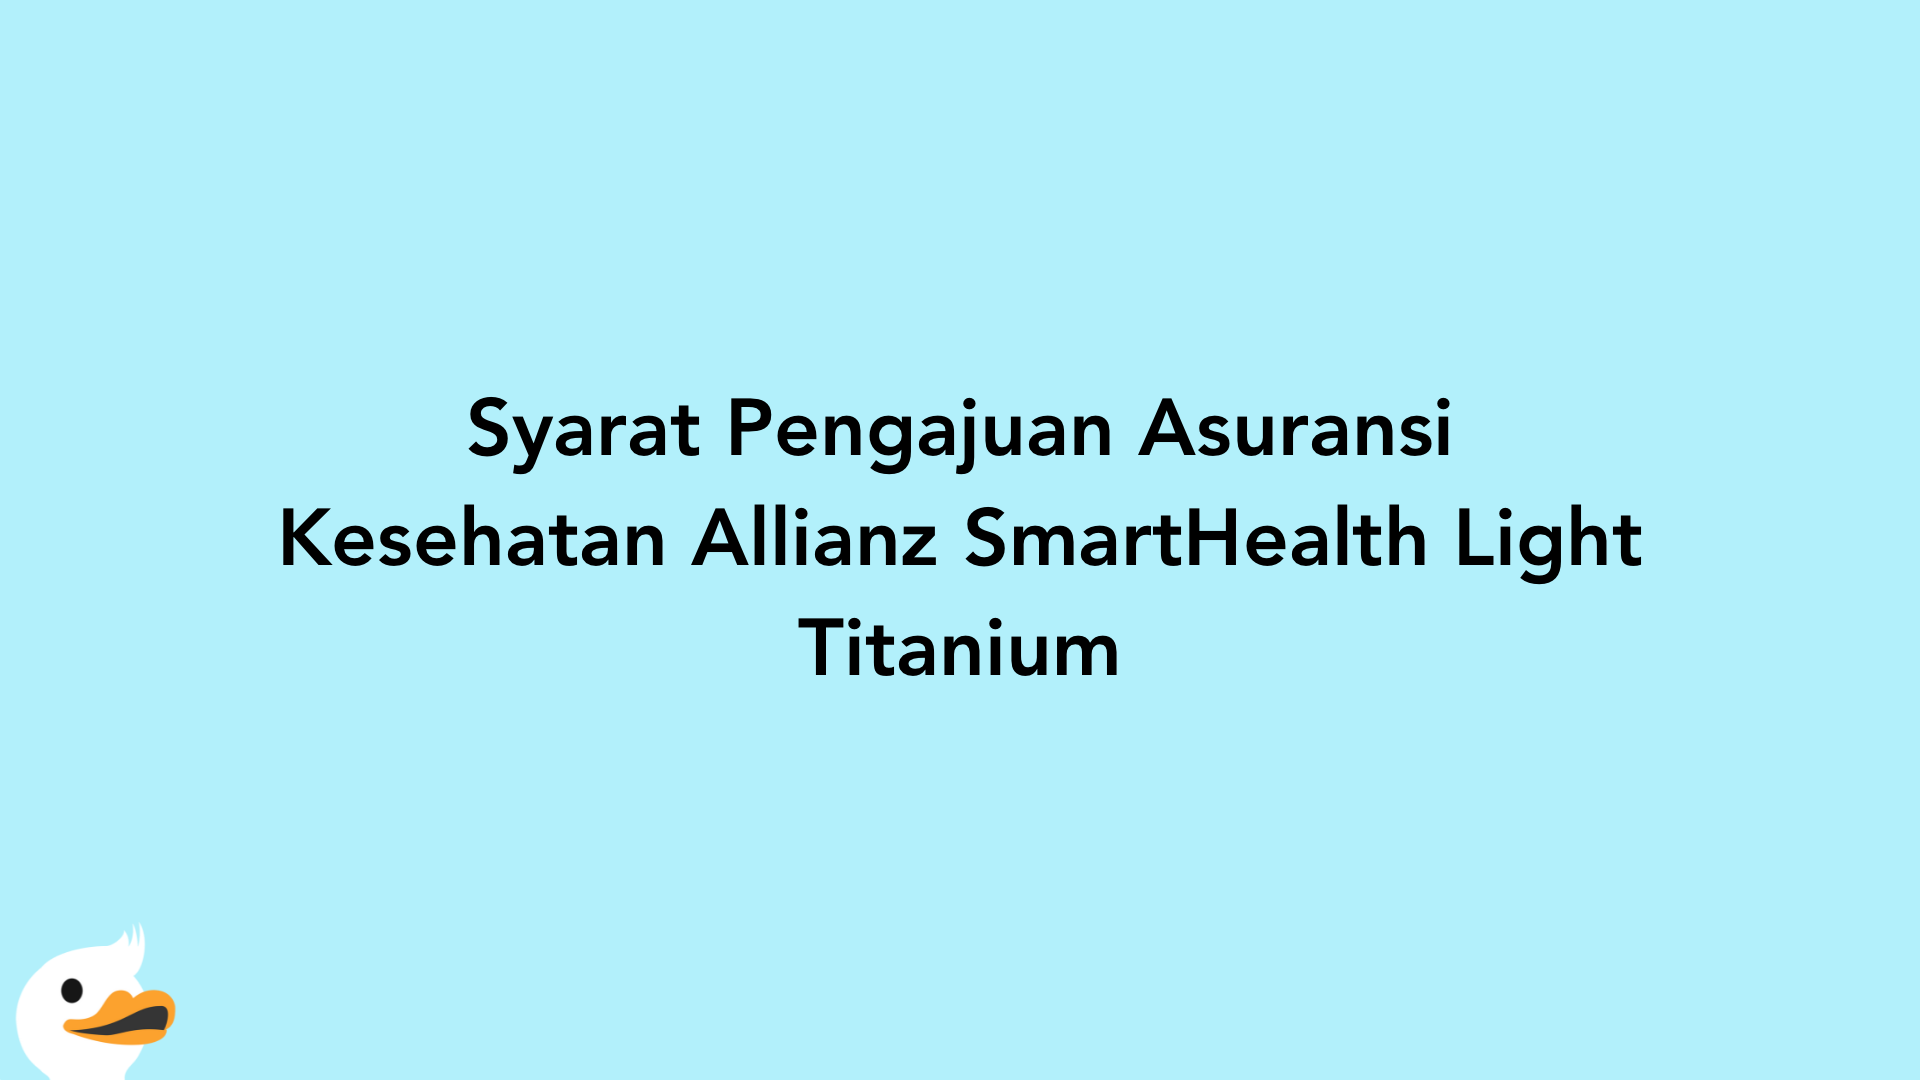 Syarat Pengajuan Asuransi Kesehatan Allianz SmartHealth Light Titanium